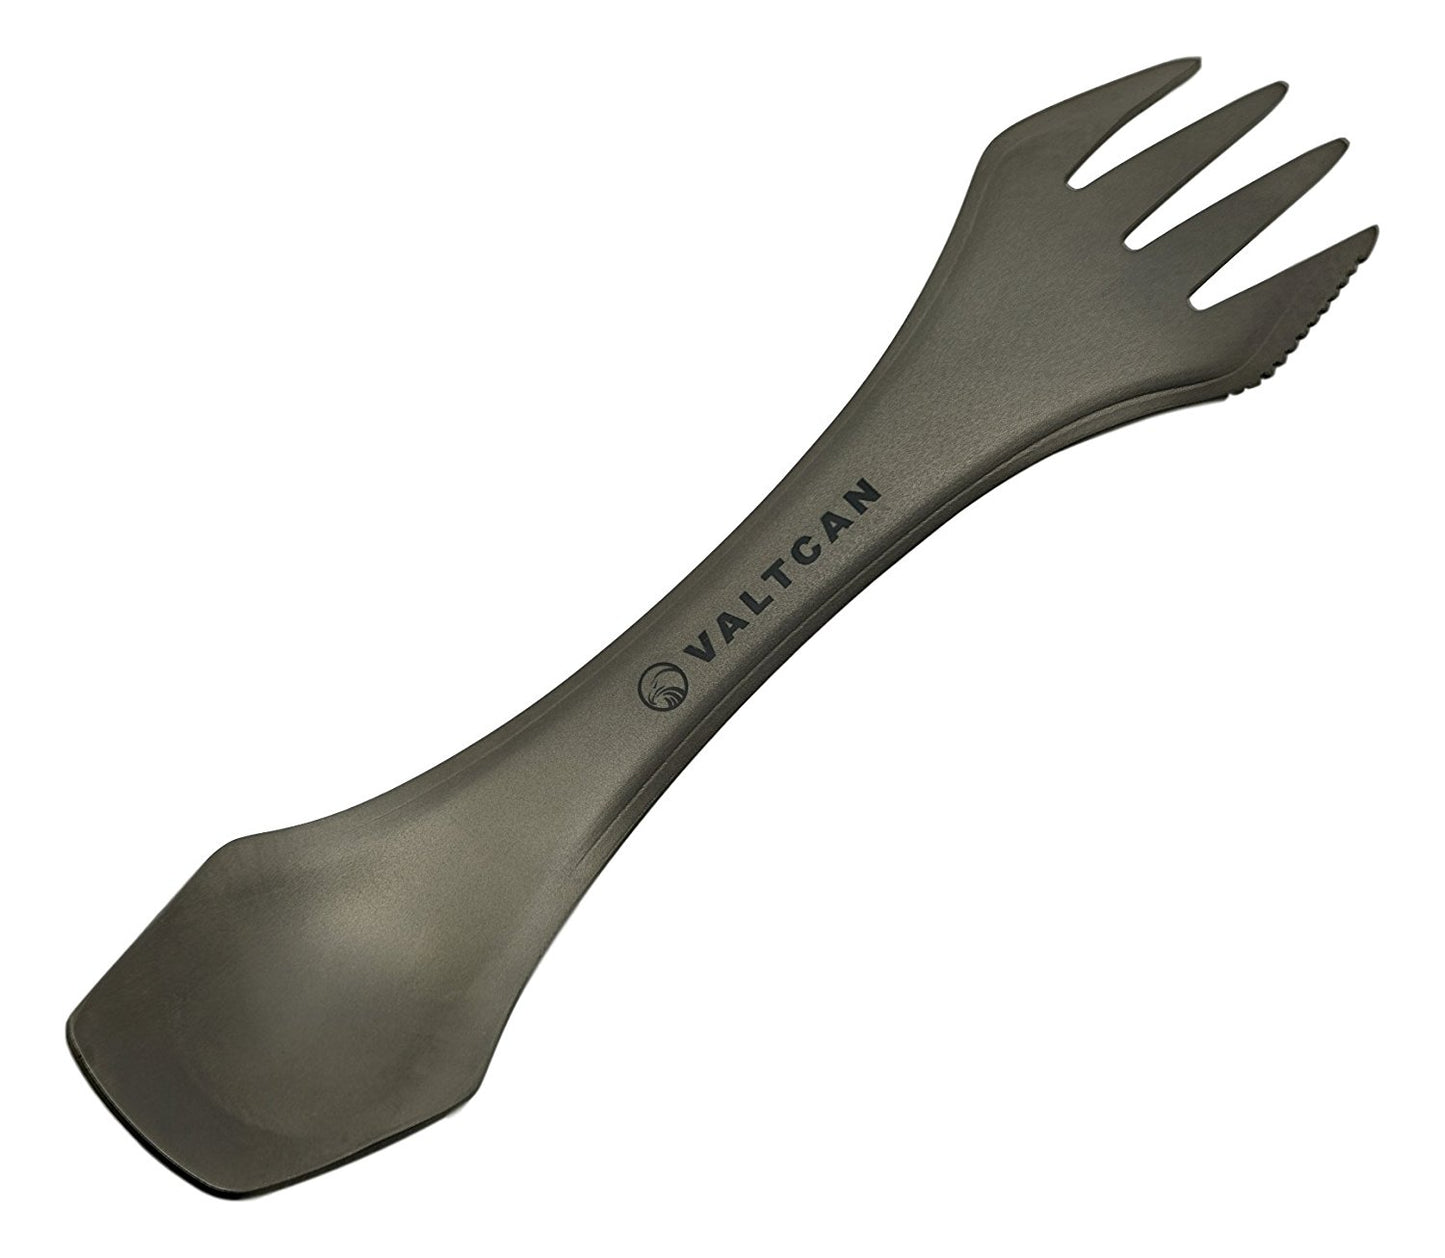 VALTCAN Titanium Spork 3-in-1 Fork Spoon Knife Essential Camping Flatware 24g